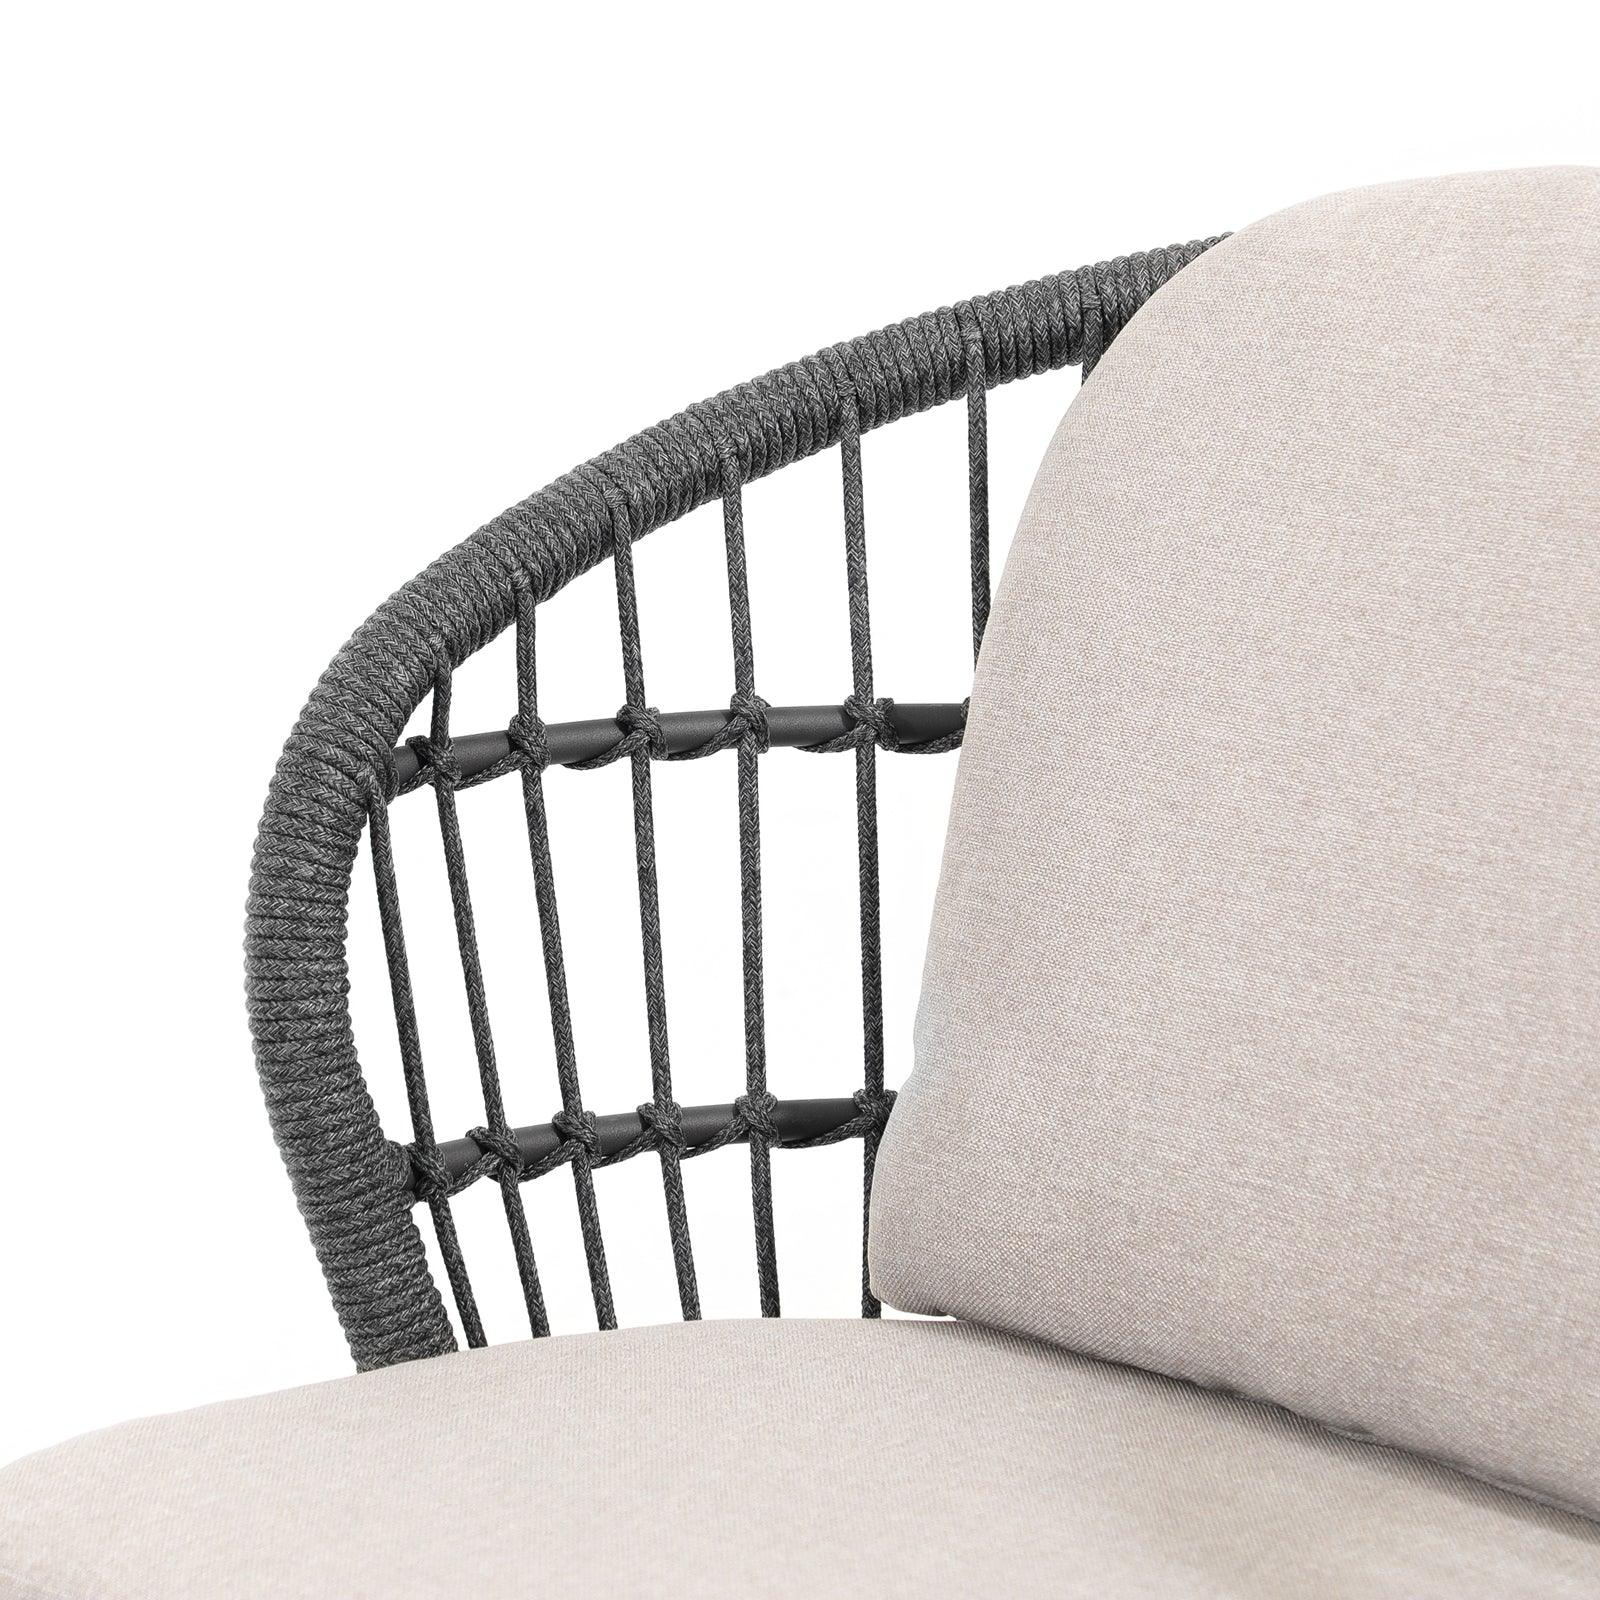 Comino dark grey rope chair with aluminum frame, light grey cushions, cushion detail - Jardina Furniture